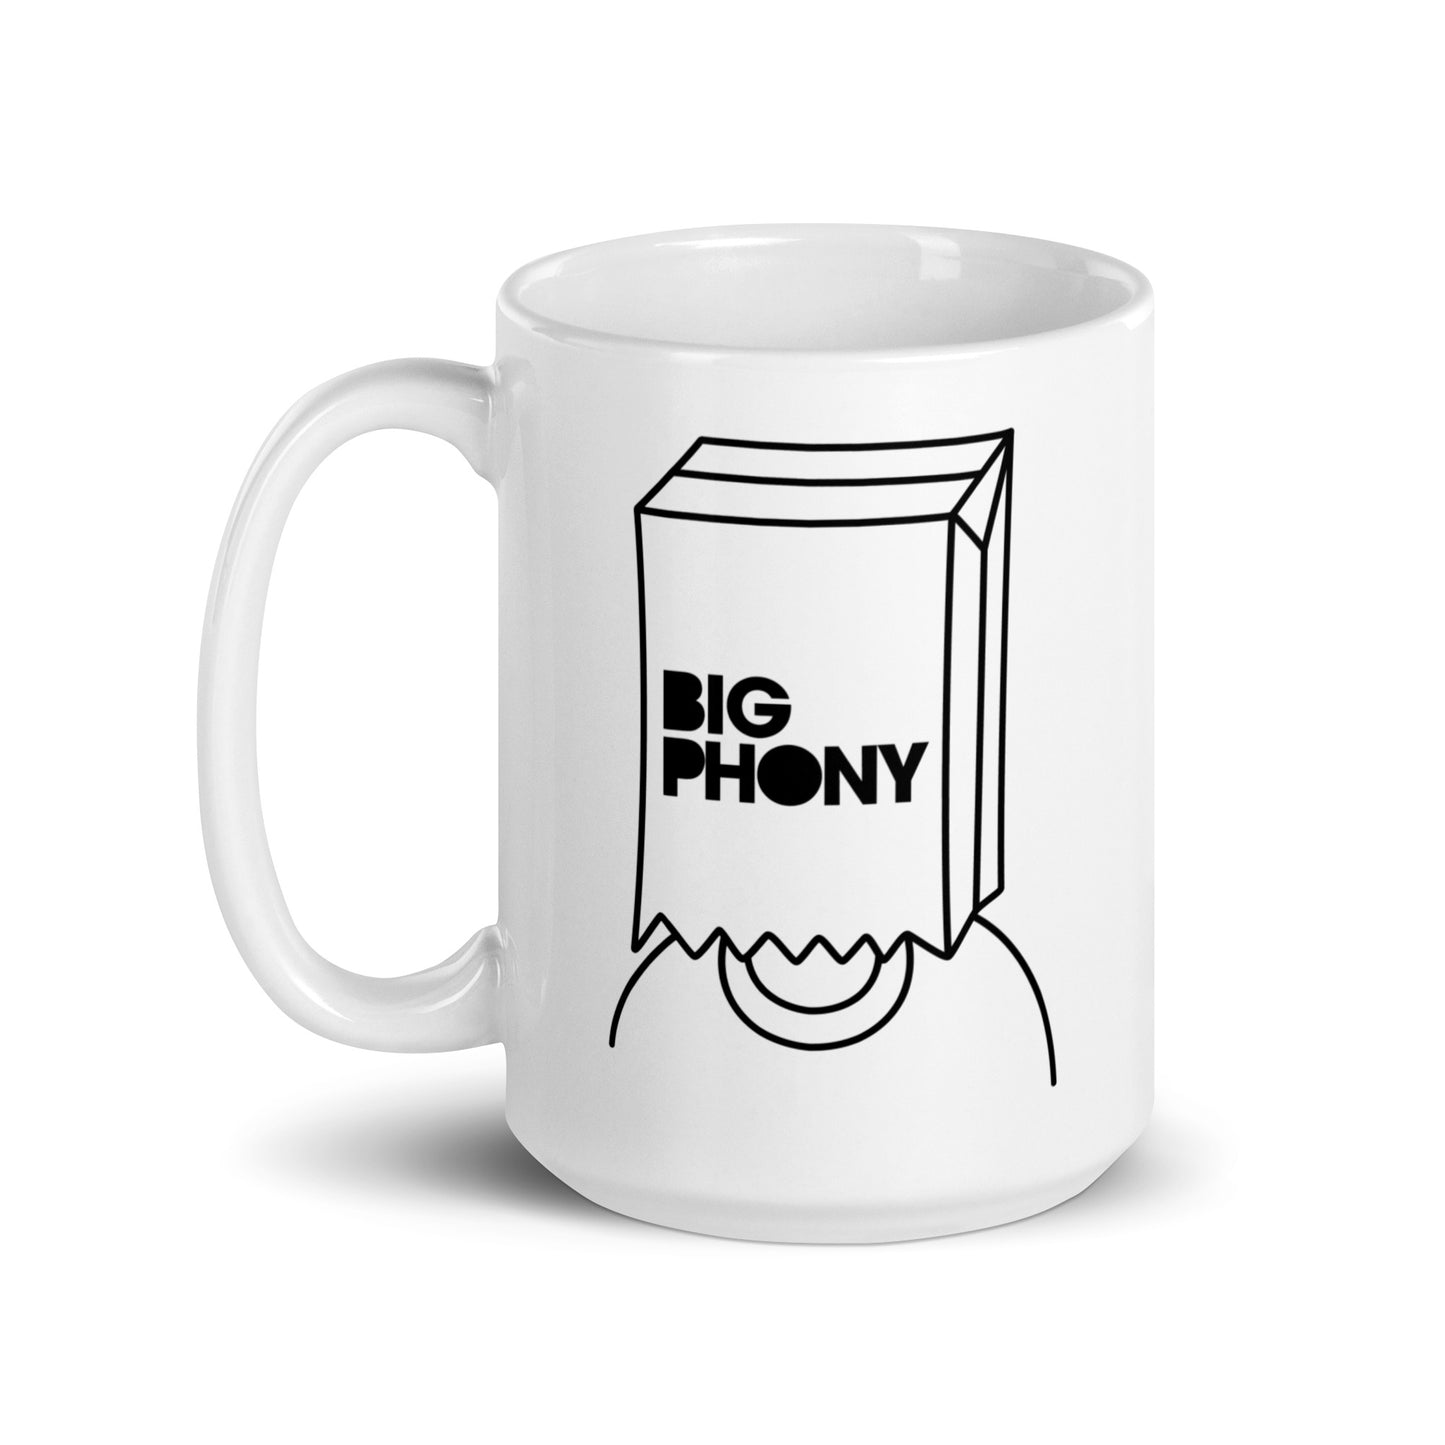 Big Phony White glossy mug